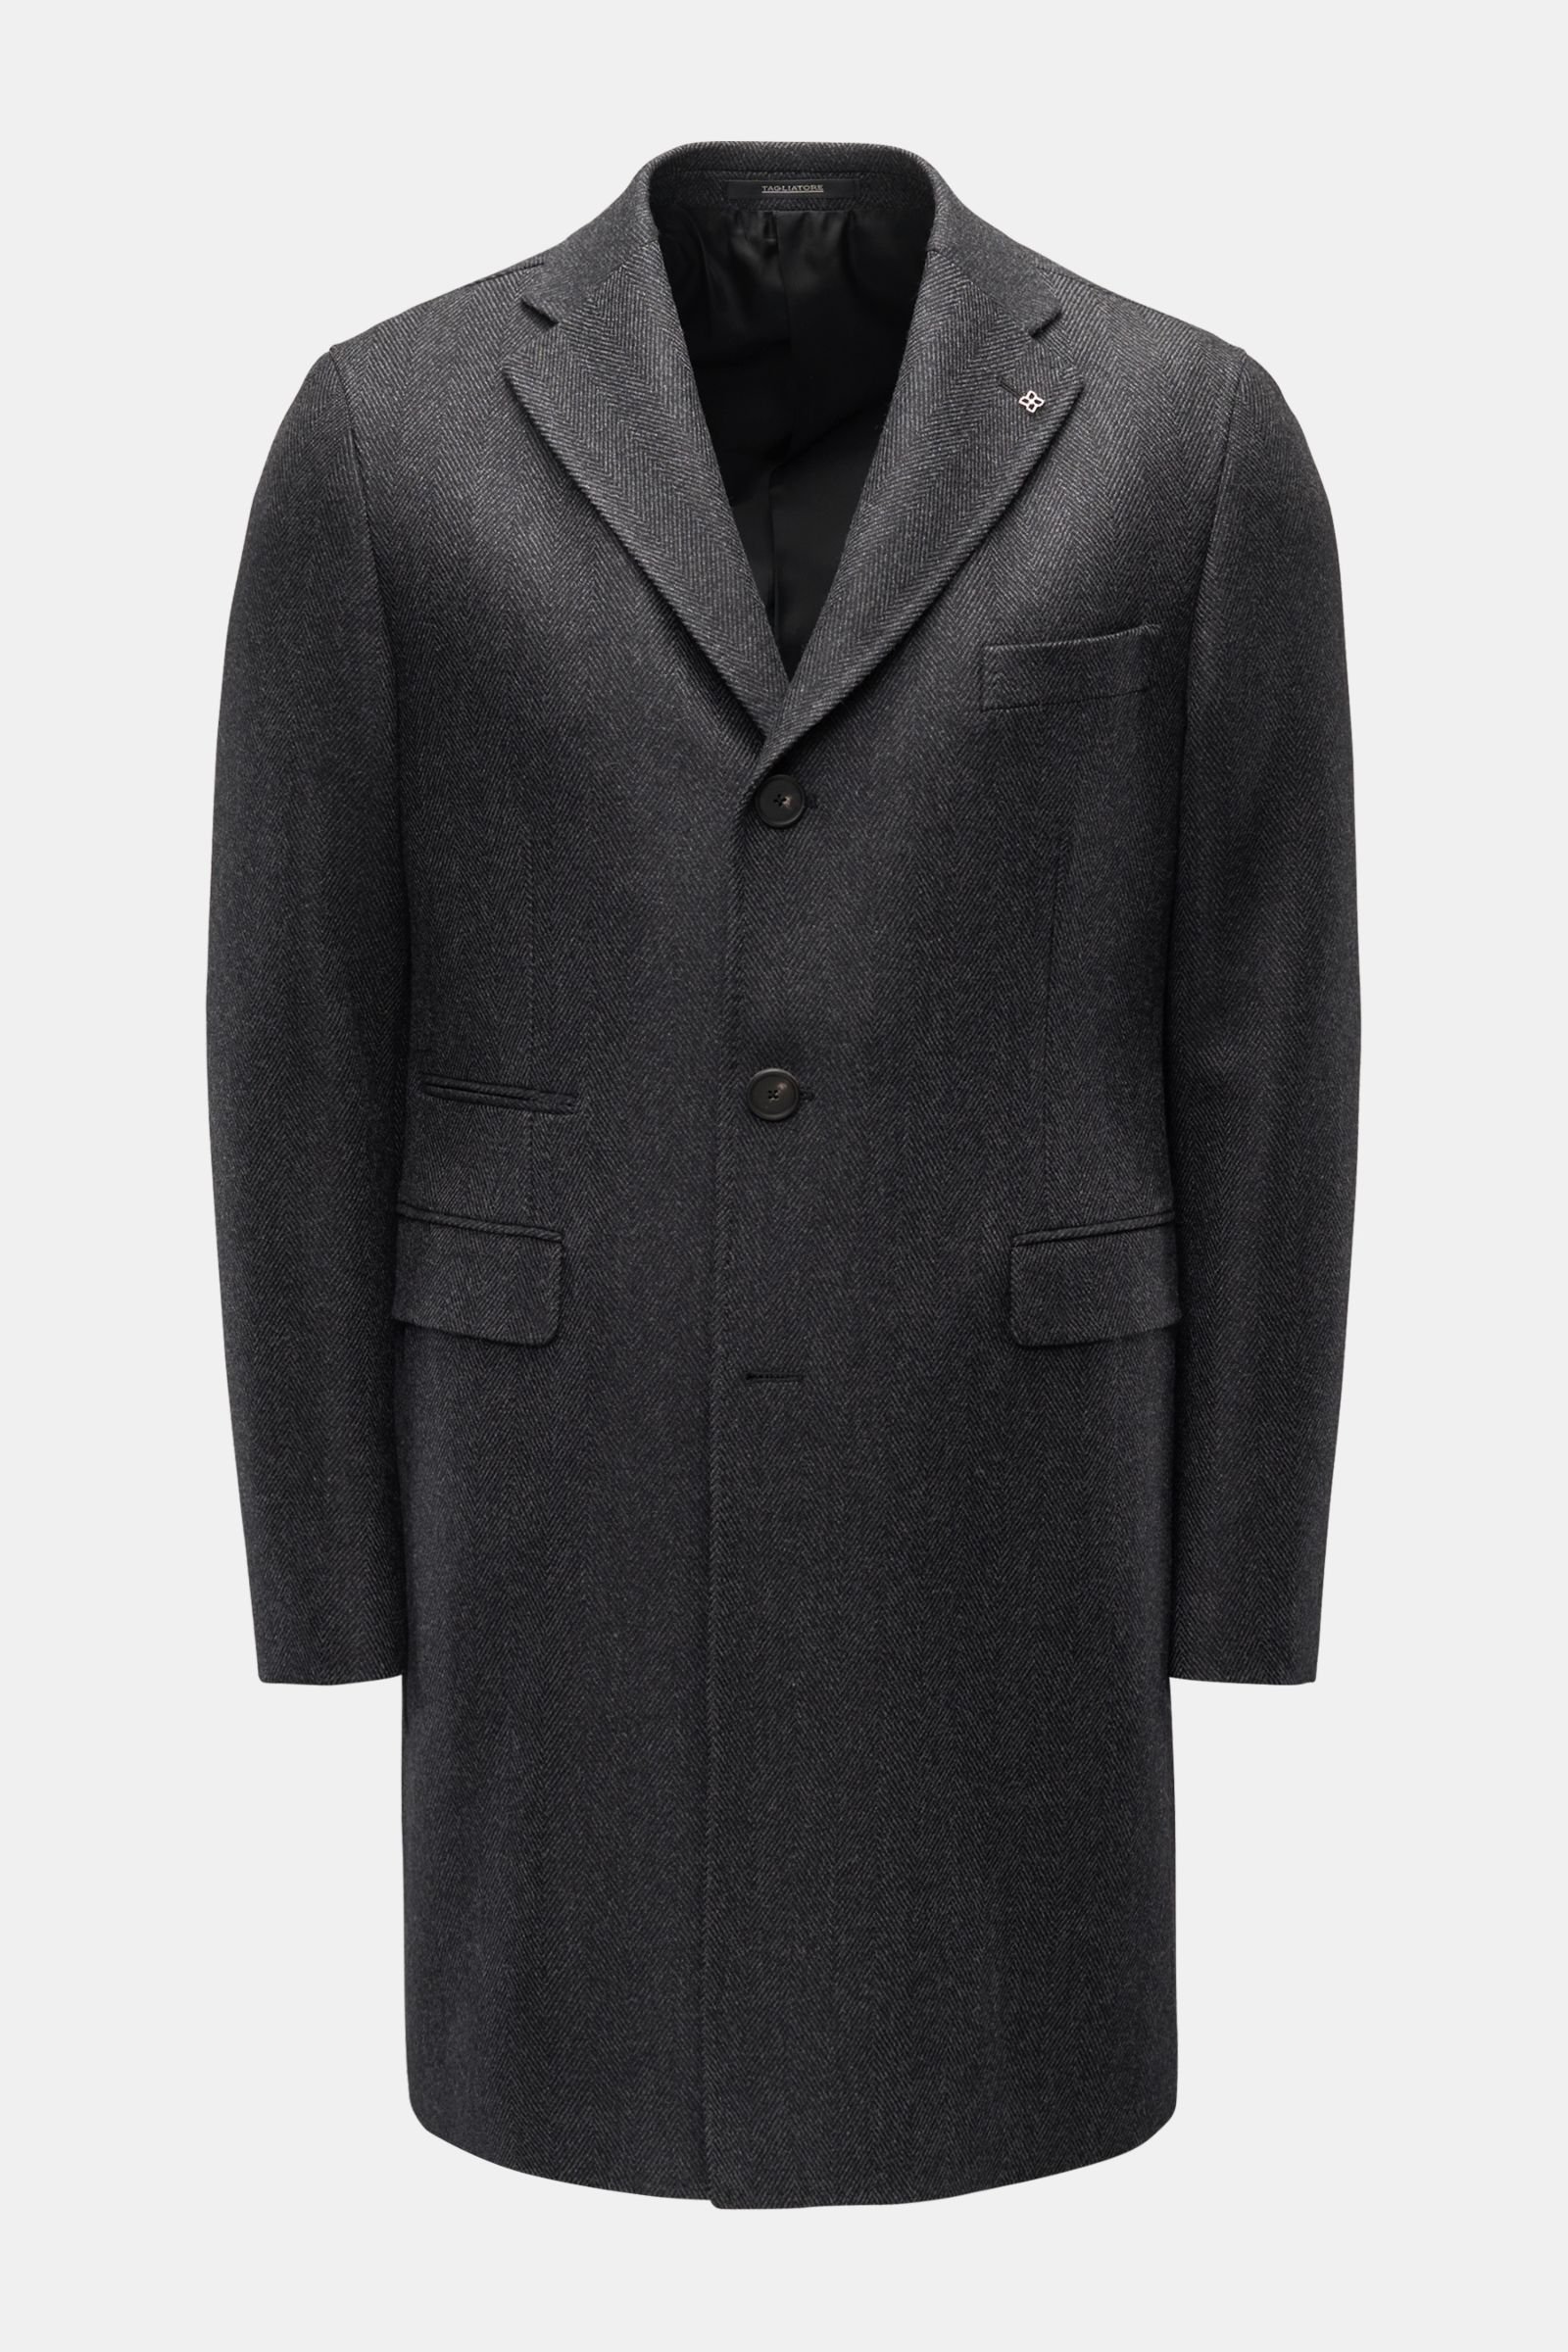 Coat dark grey patterned